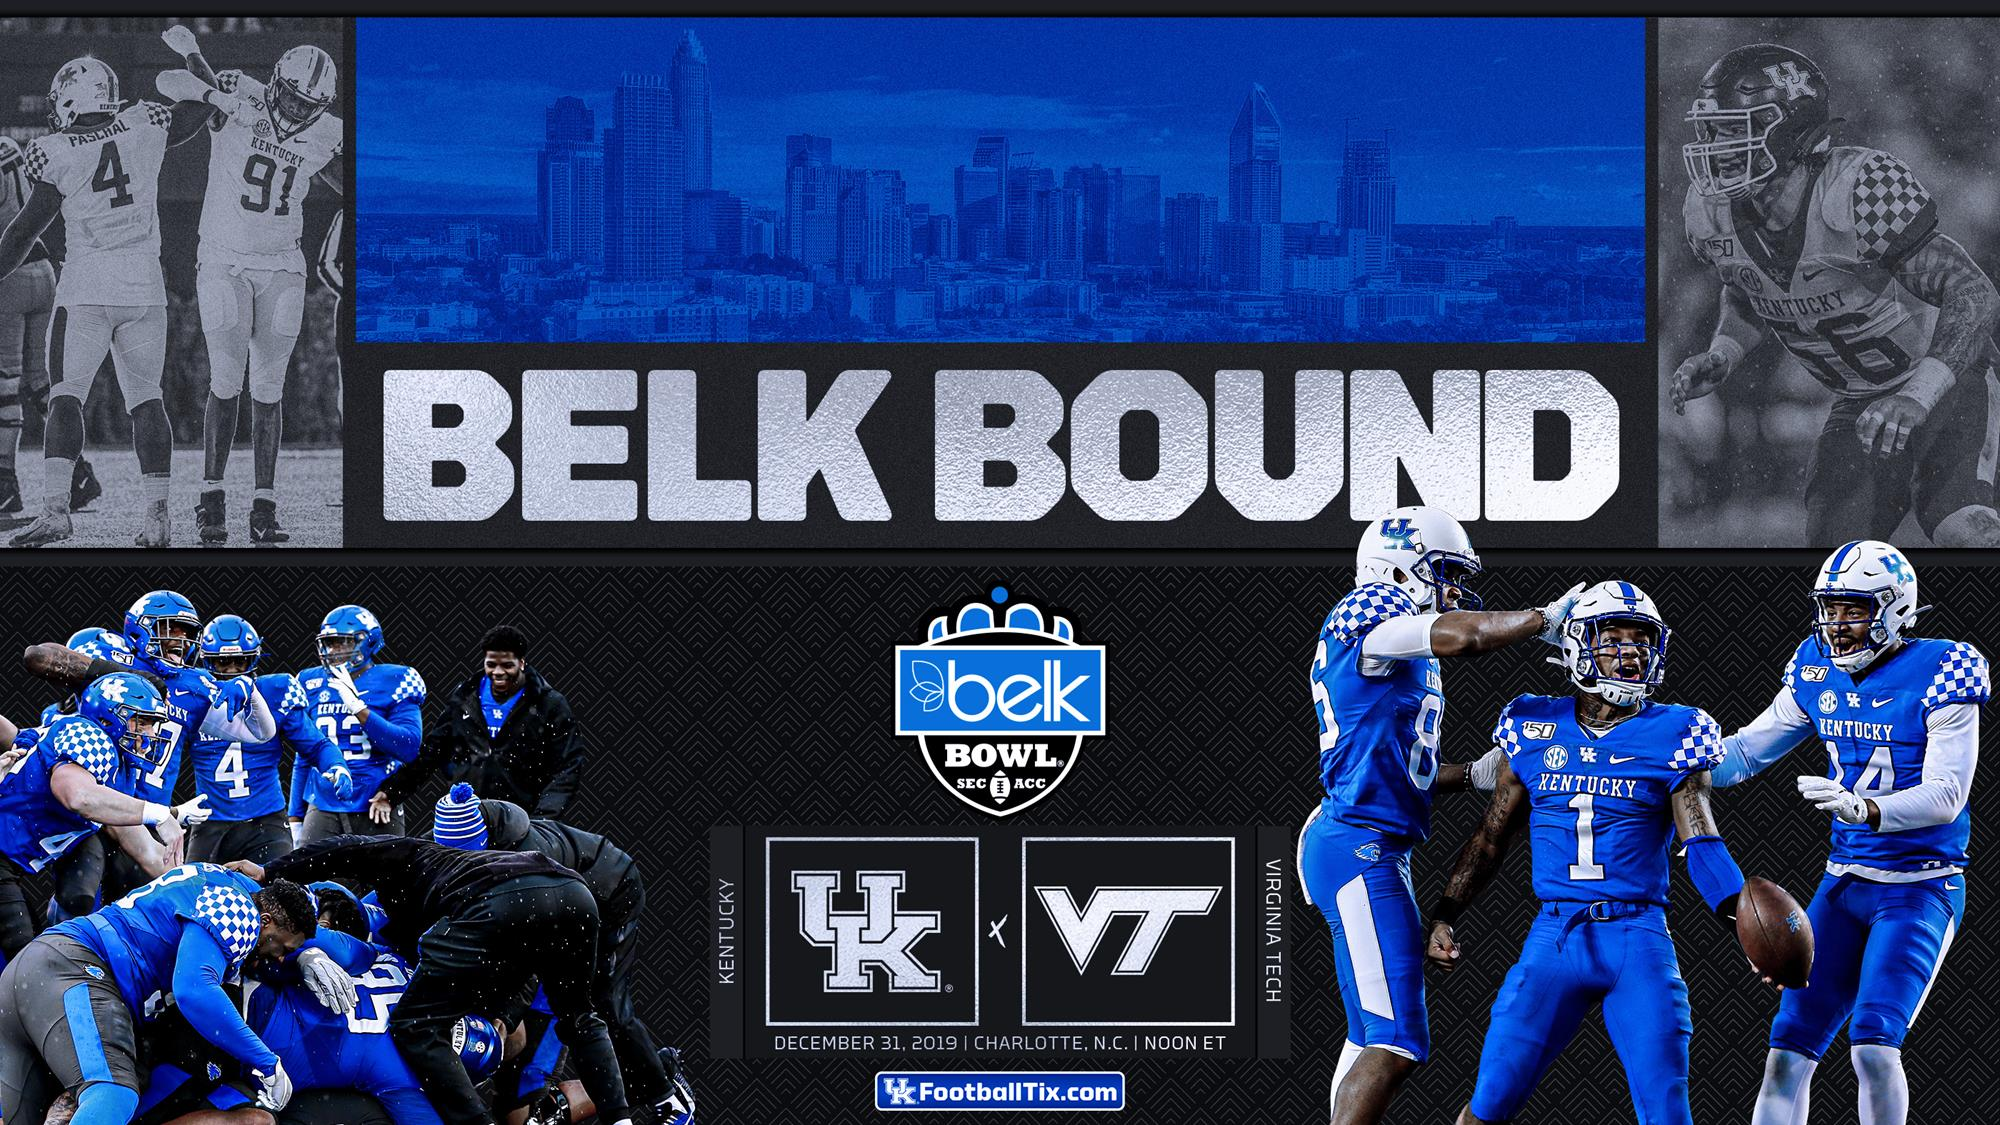 Kentucky Headed to Belk Bowl